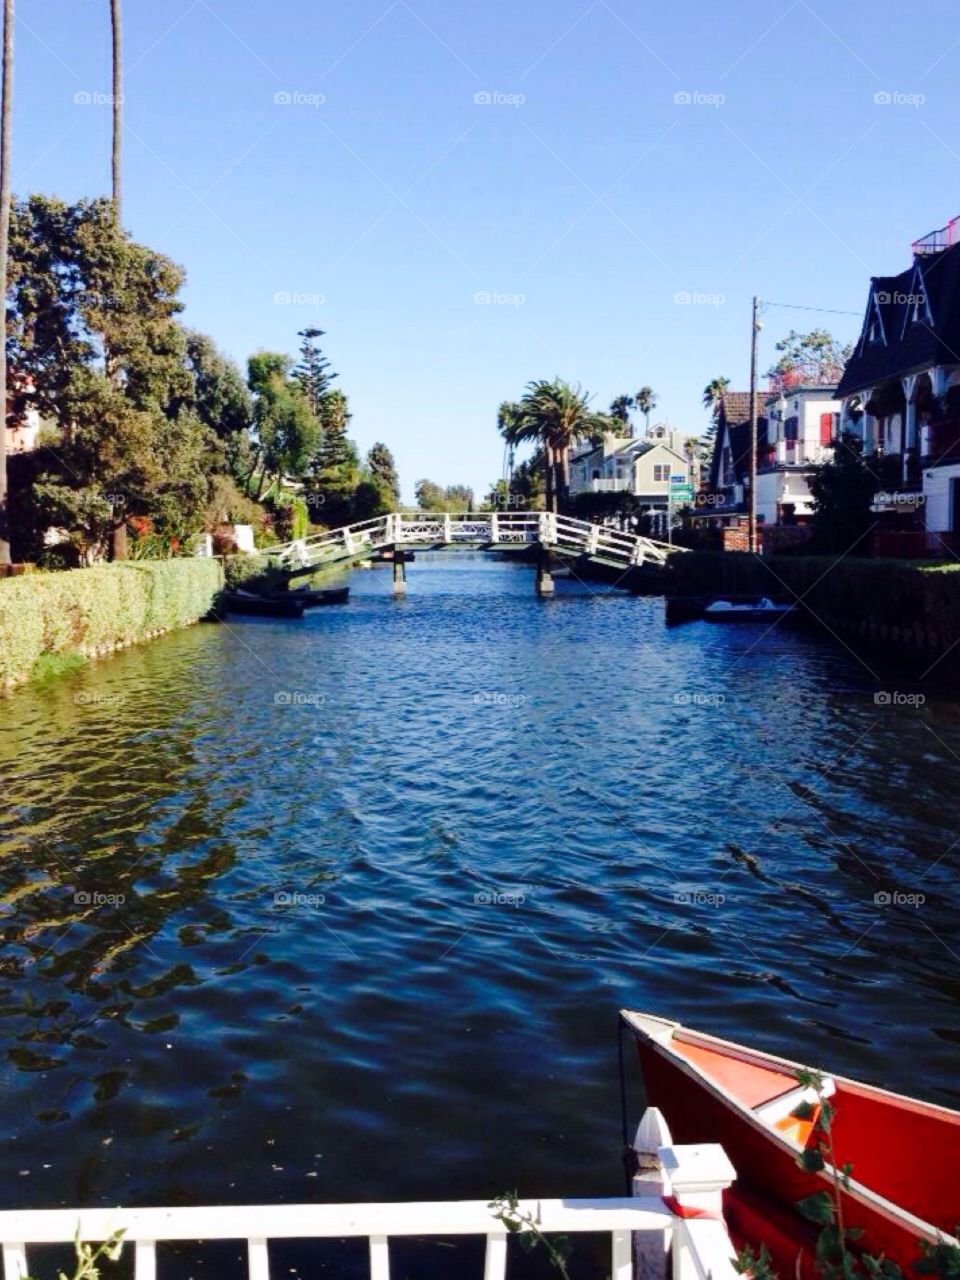 Venice Canals. Venice, California 